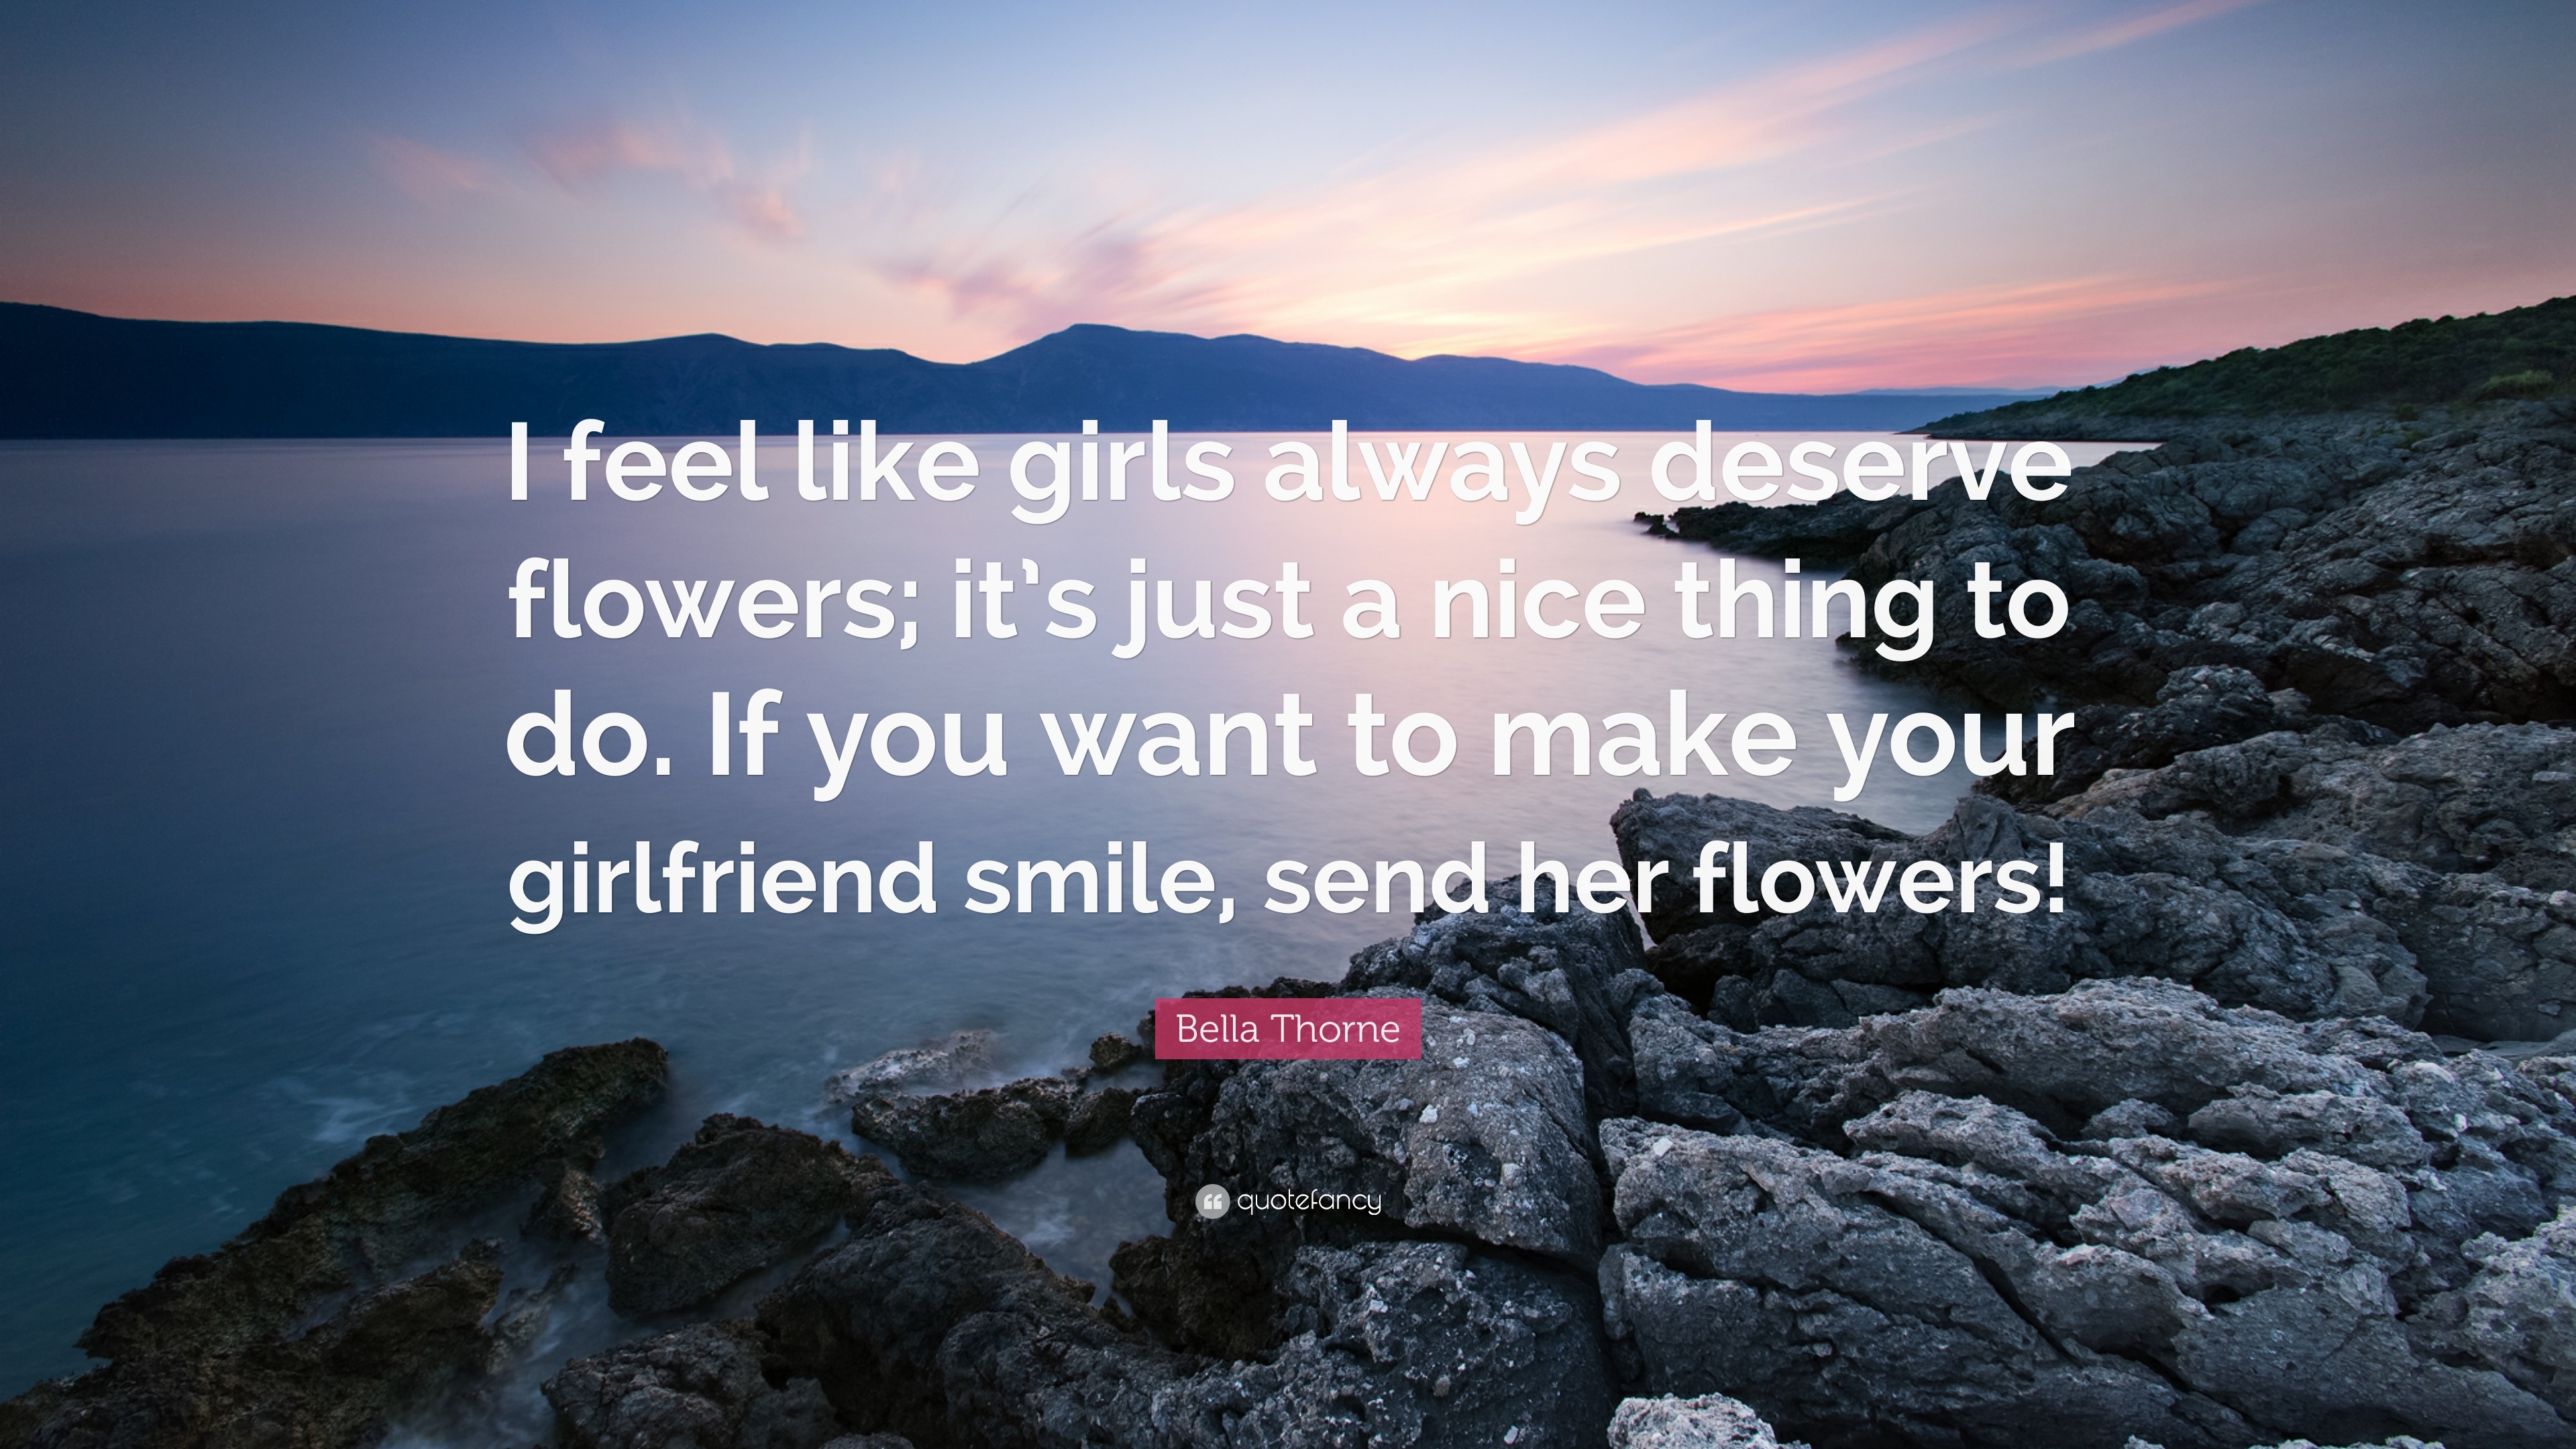 Bella Thorne Quote: “I feel like girls always deserve flowers; it’s ...